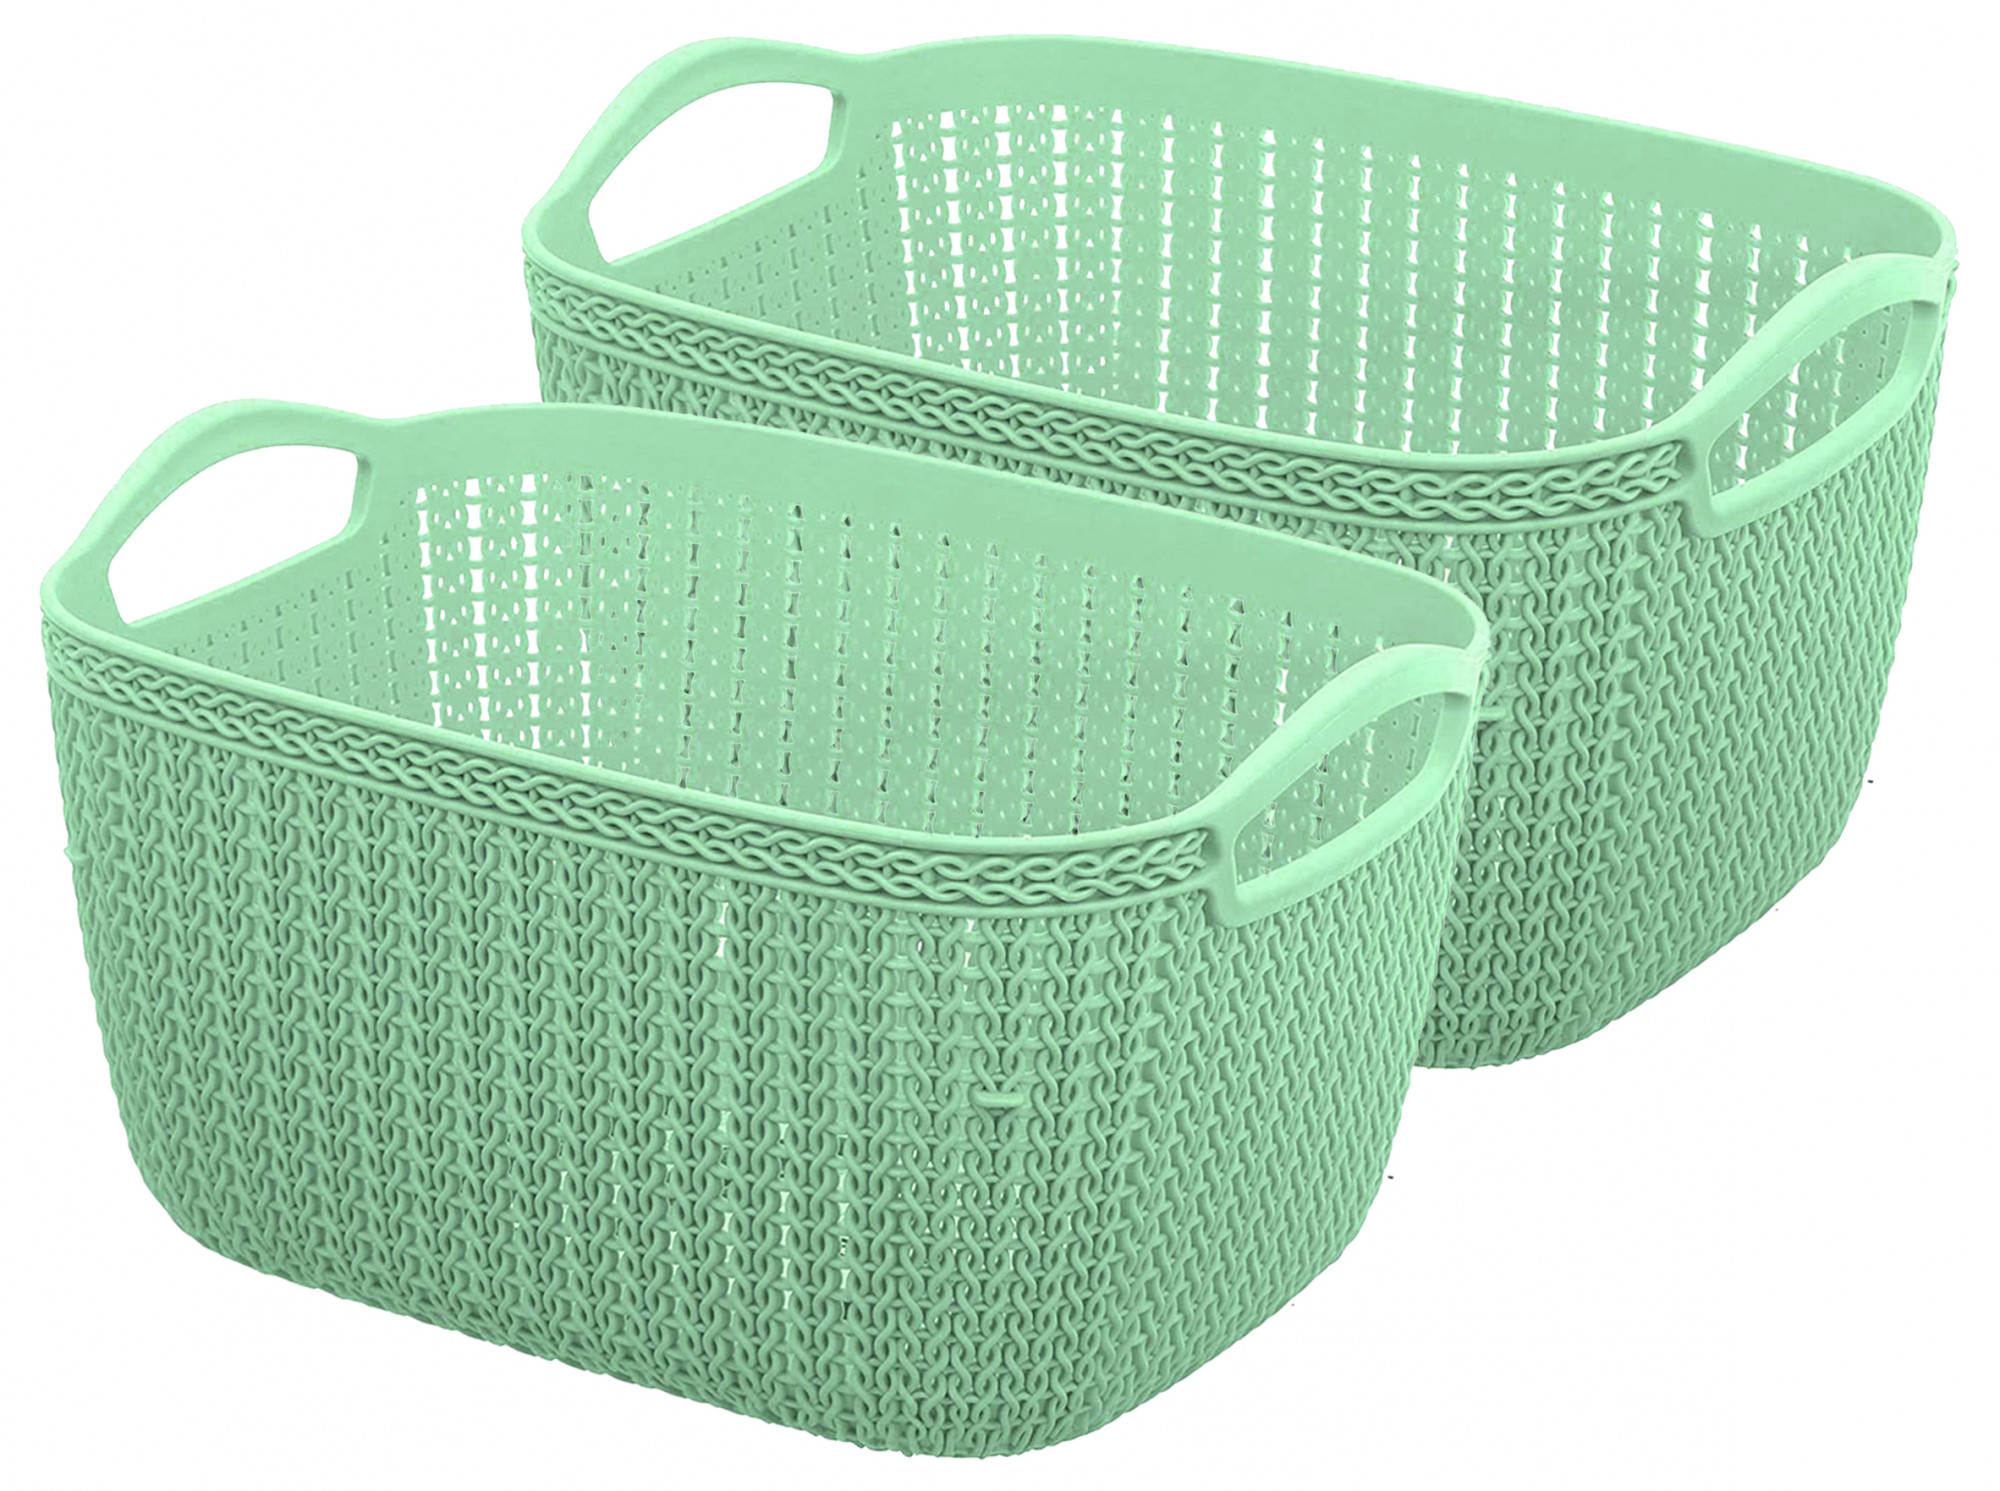 Kuber Industries Q-6 Unbreakable Plastic Multipurpose Large Size Flexible Storage Baskets/Fruit Vegetable Bathroom Stationary Home Basket with Handles (Light Green)